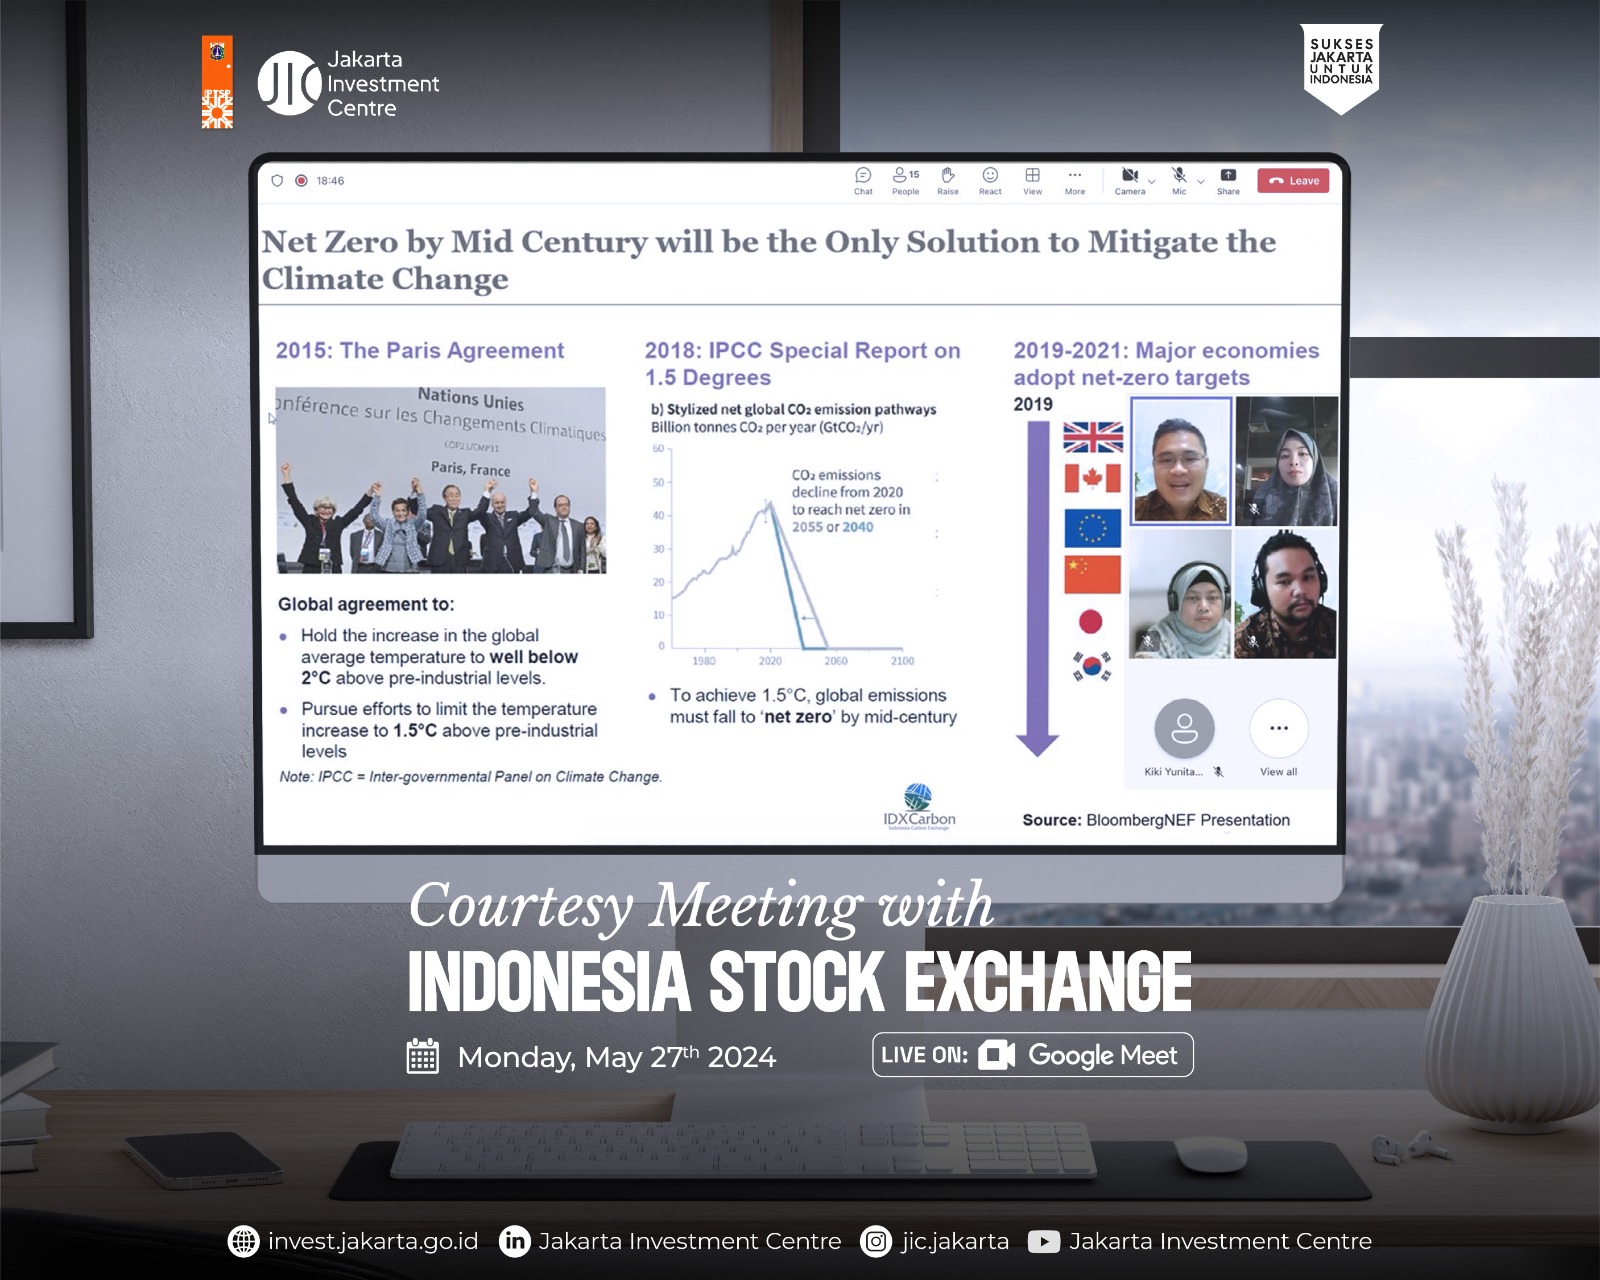 JIC - Courtesy Meeting with Indonesia Stock Exchange